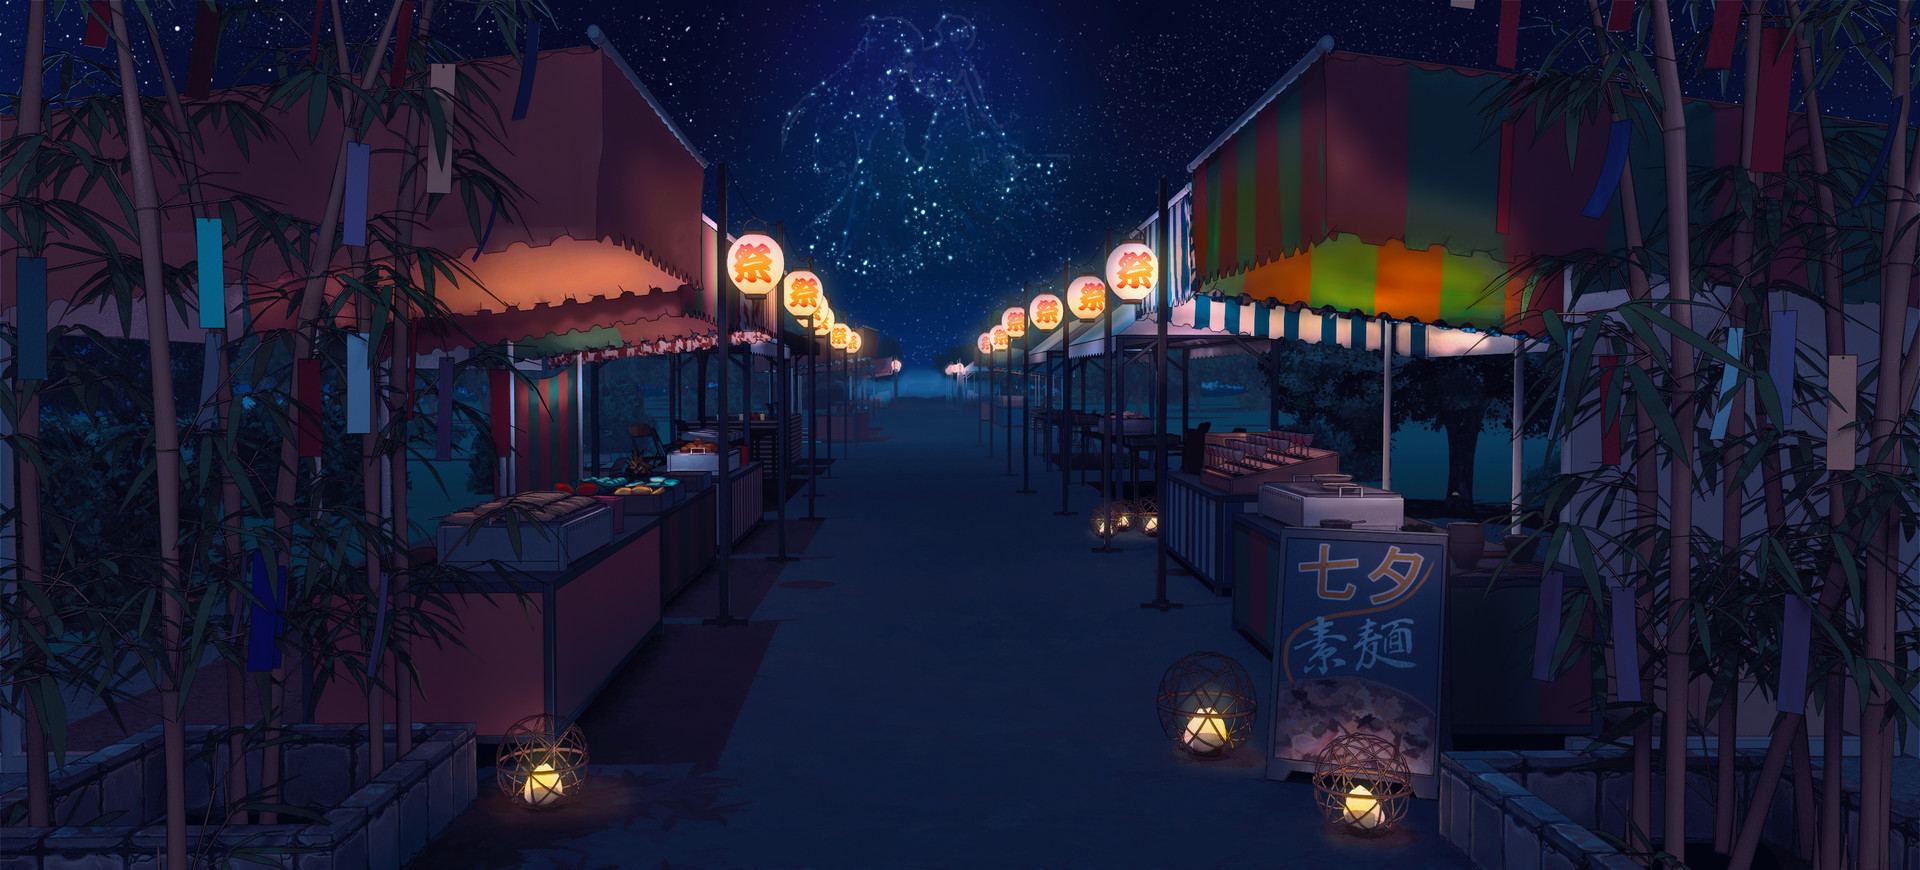 Free Vectors  Stalls fireworks and lanterns Summer festival background  illustration